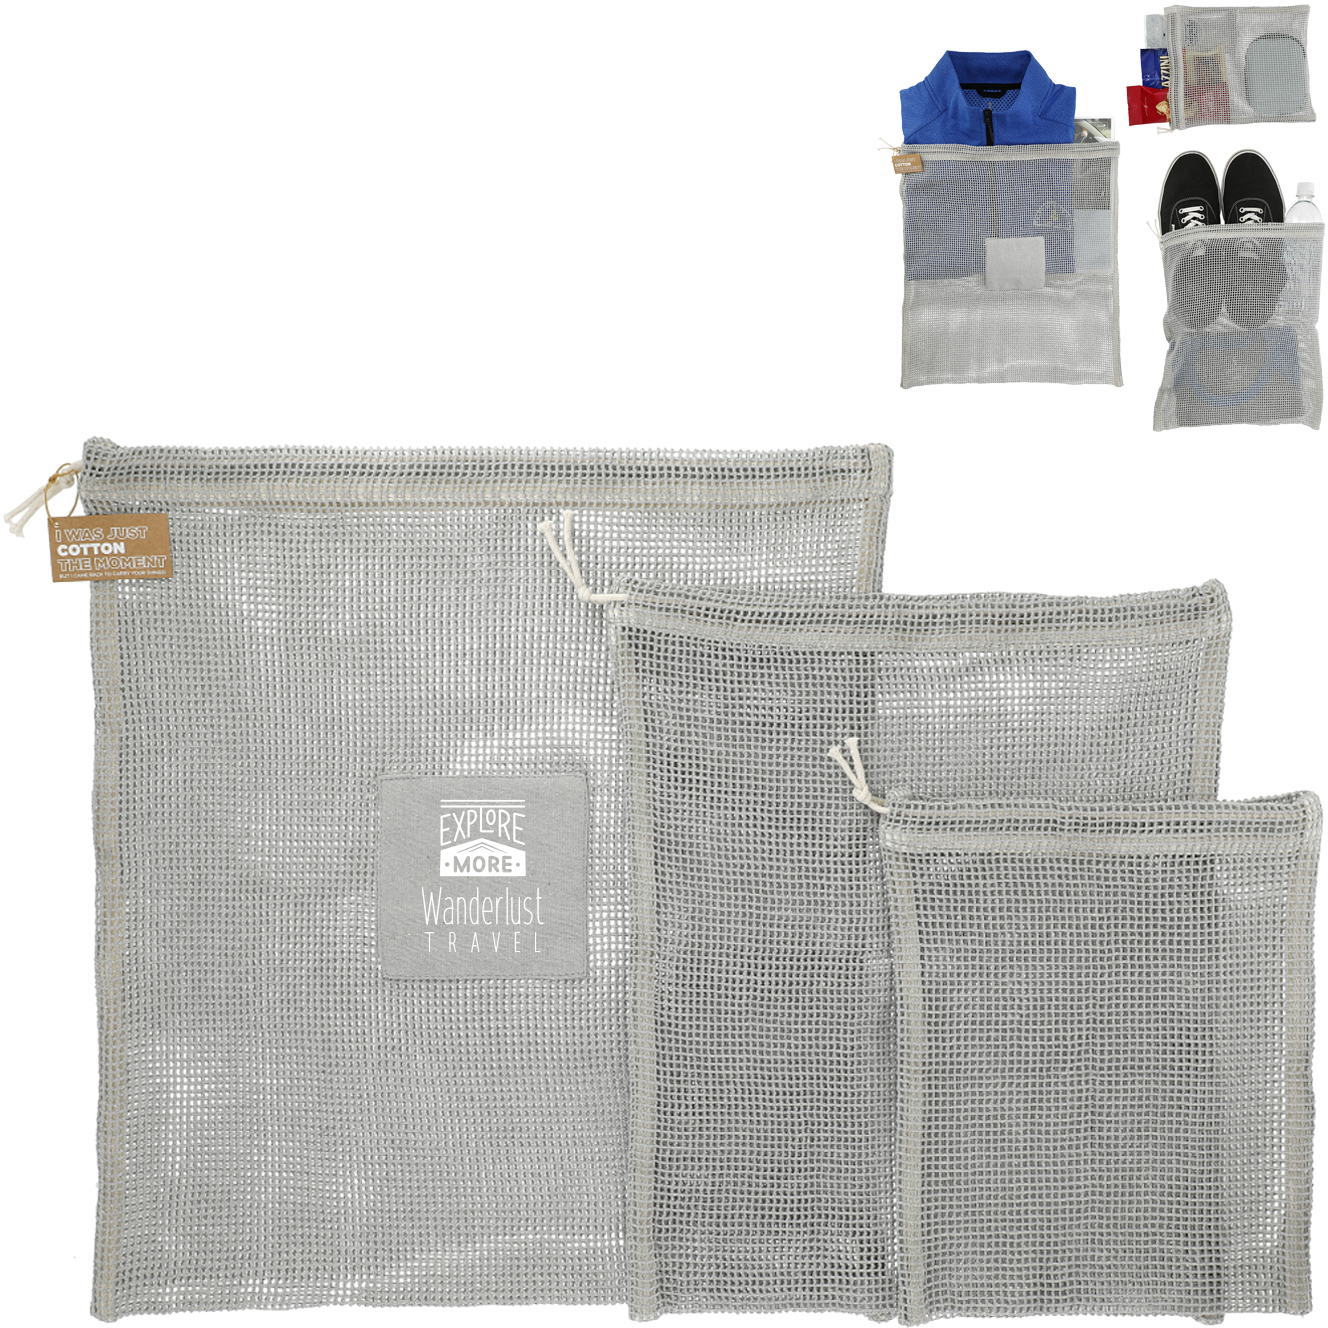 Linen Store Laundry Basket Pop Up Barrel Hamper Collapsible Breathable Mesh Bag Solid Color - Aqua, Adult Unisex, Size: Medium, Blue